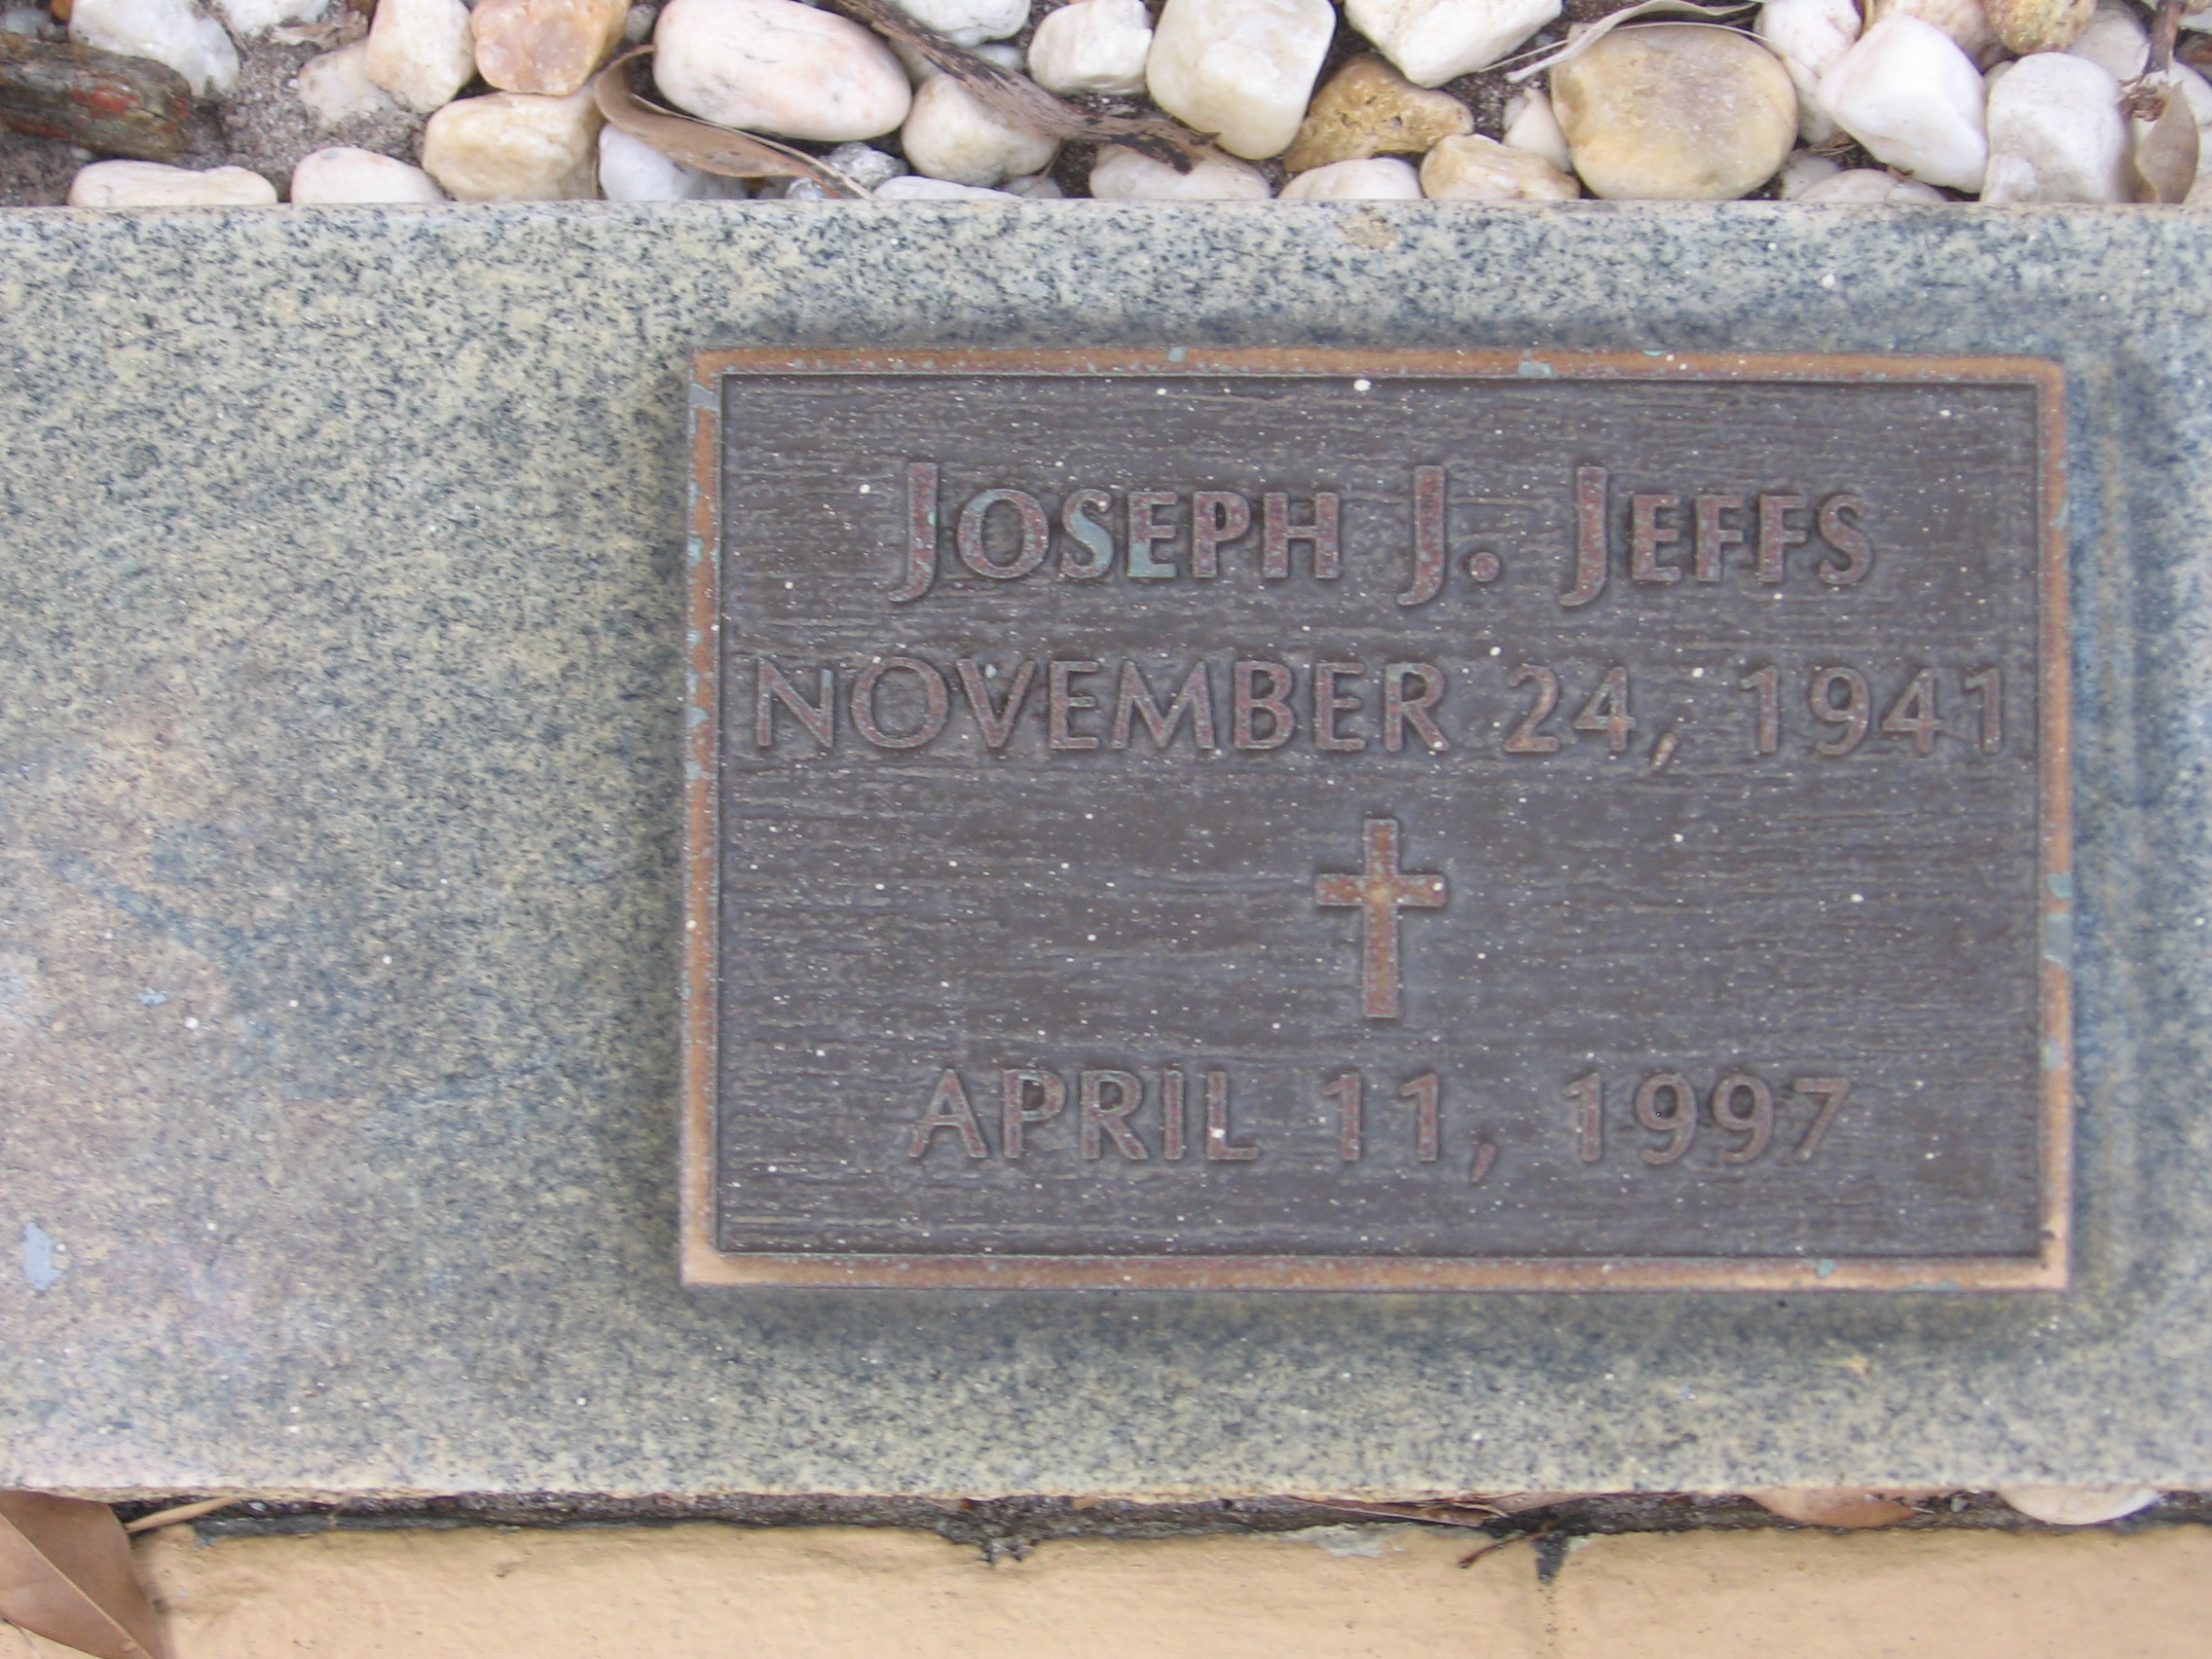 Joseph J Jeffs